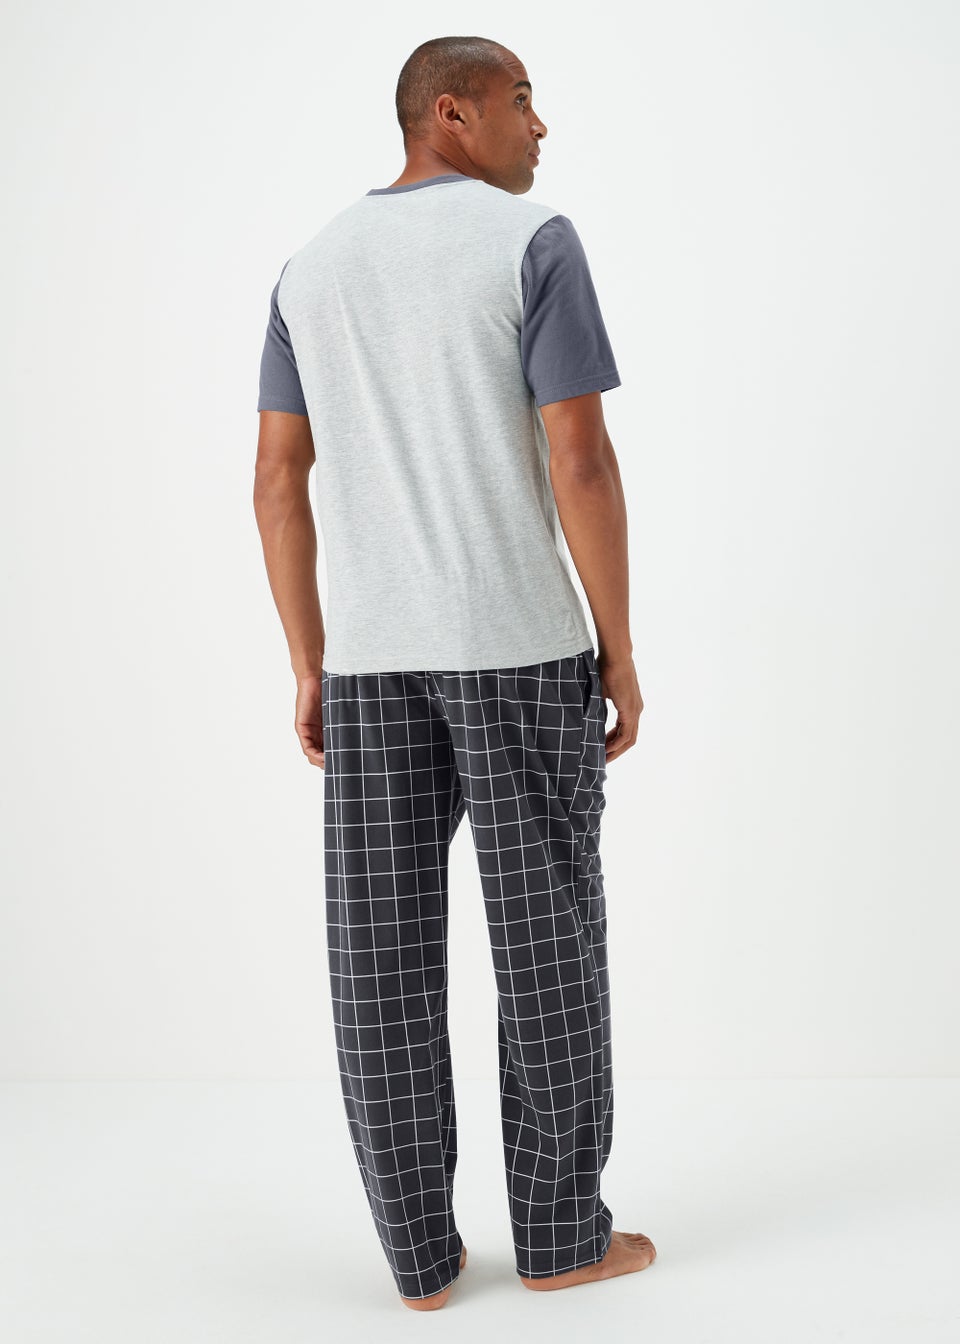 Grey Adventure Long Pyjama Set